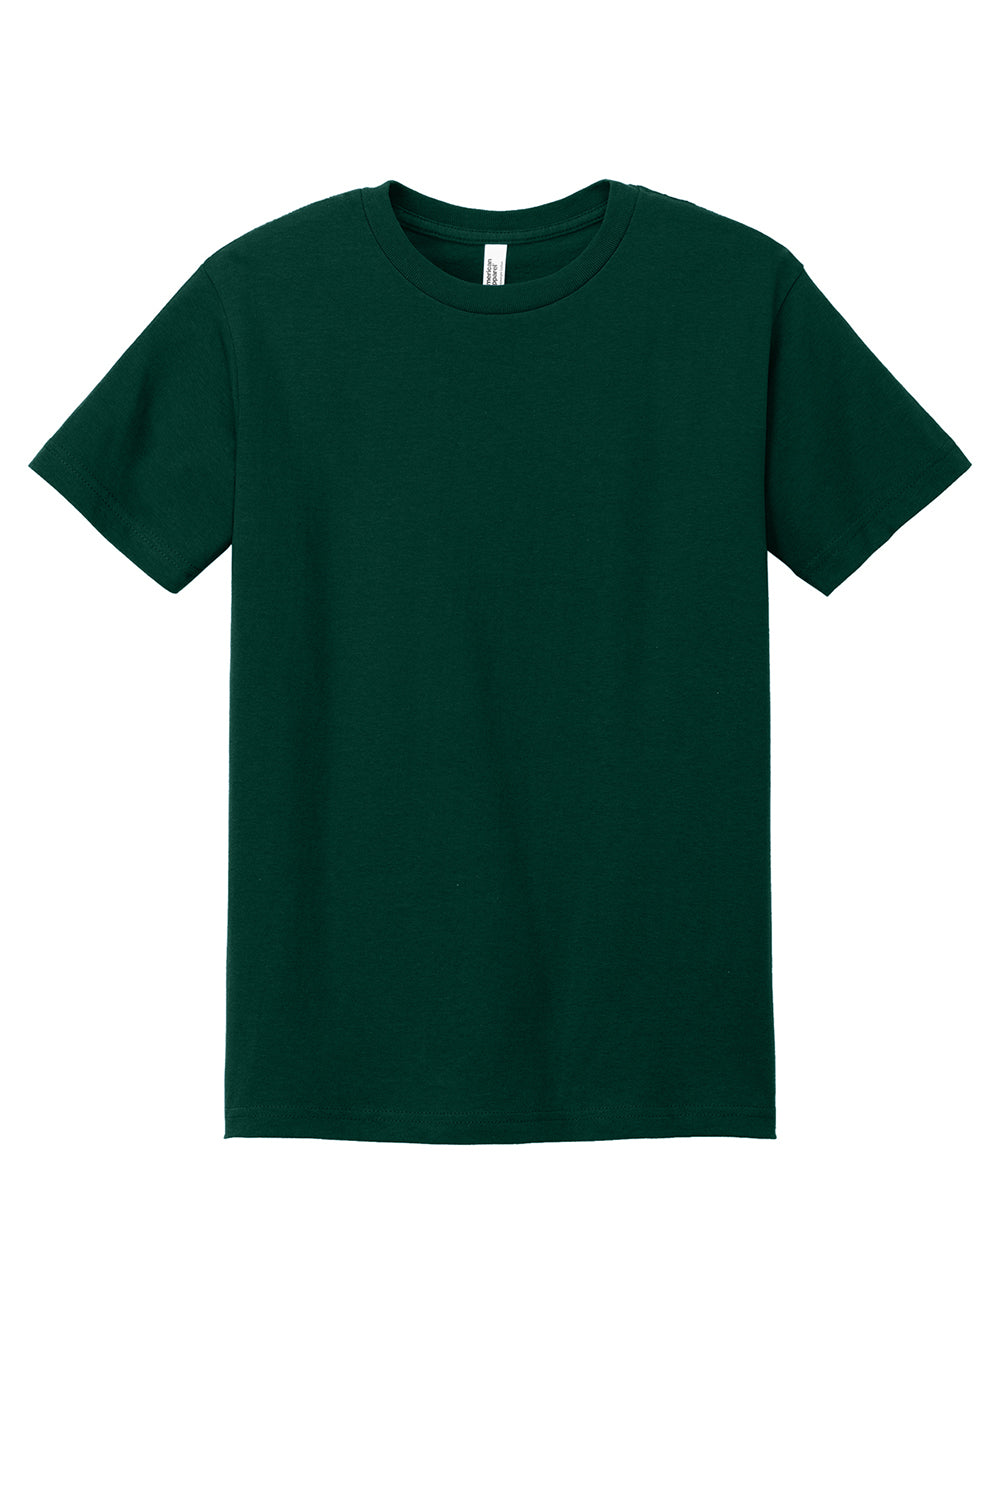 American Apparel 1301/AL1301 Mens Short Sleeve Crewneck T-Shirt Forest Green Flat Front